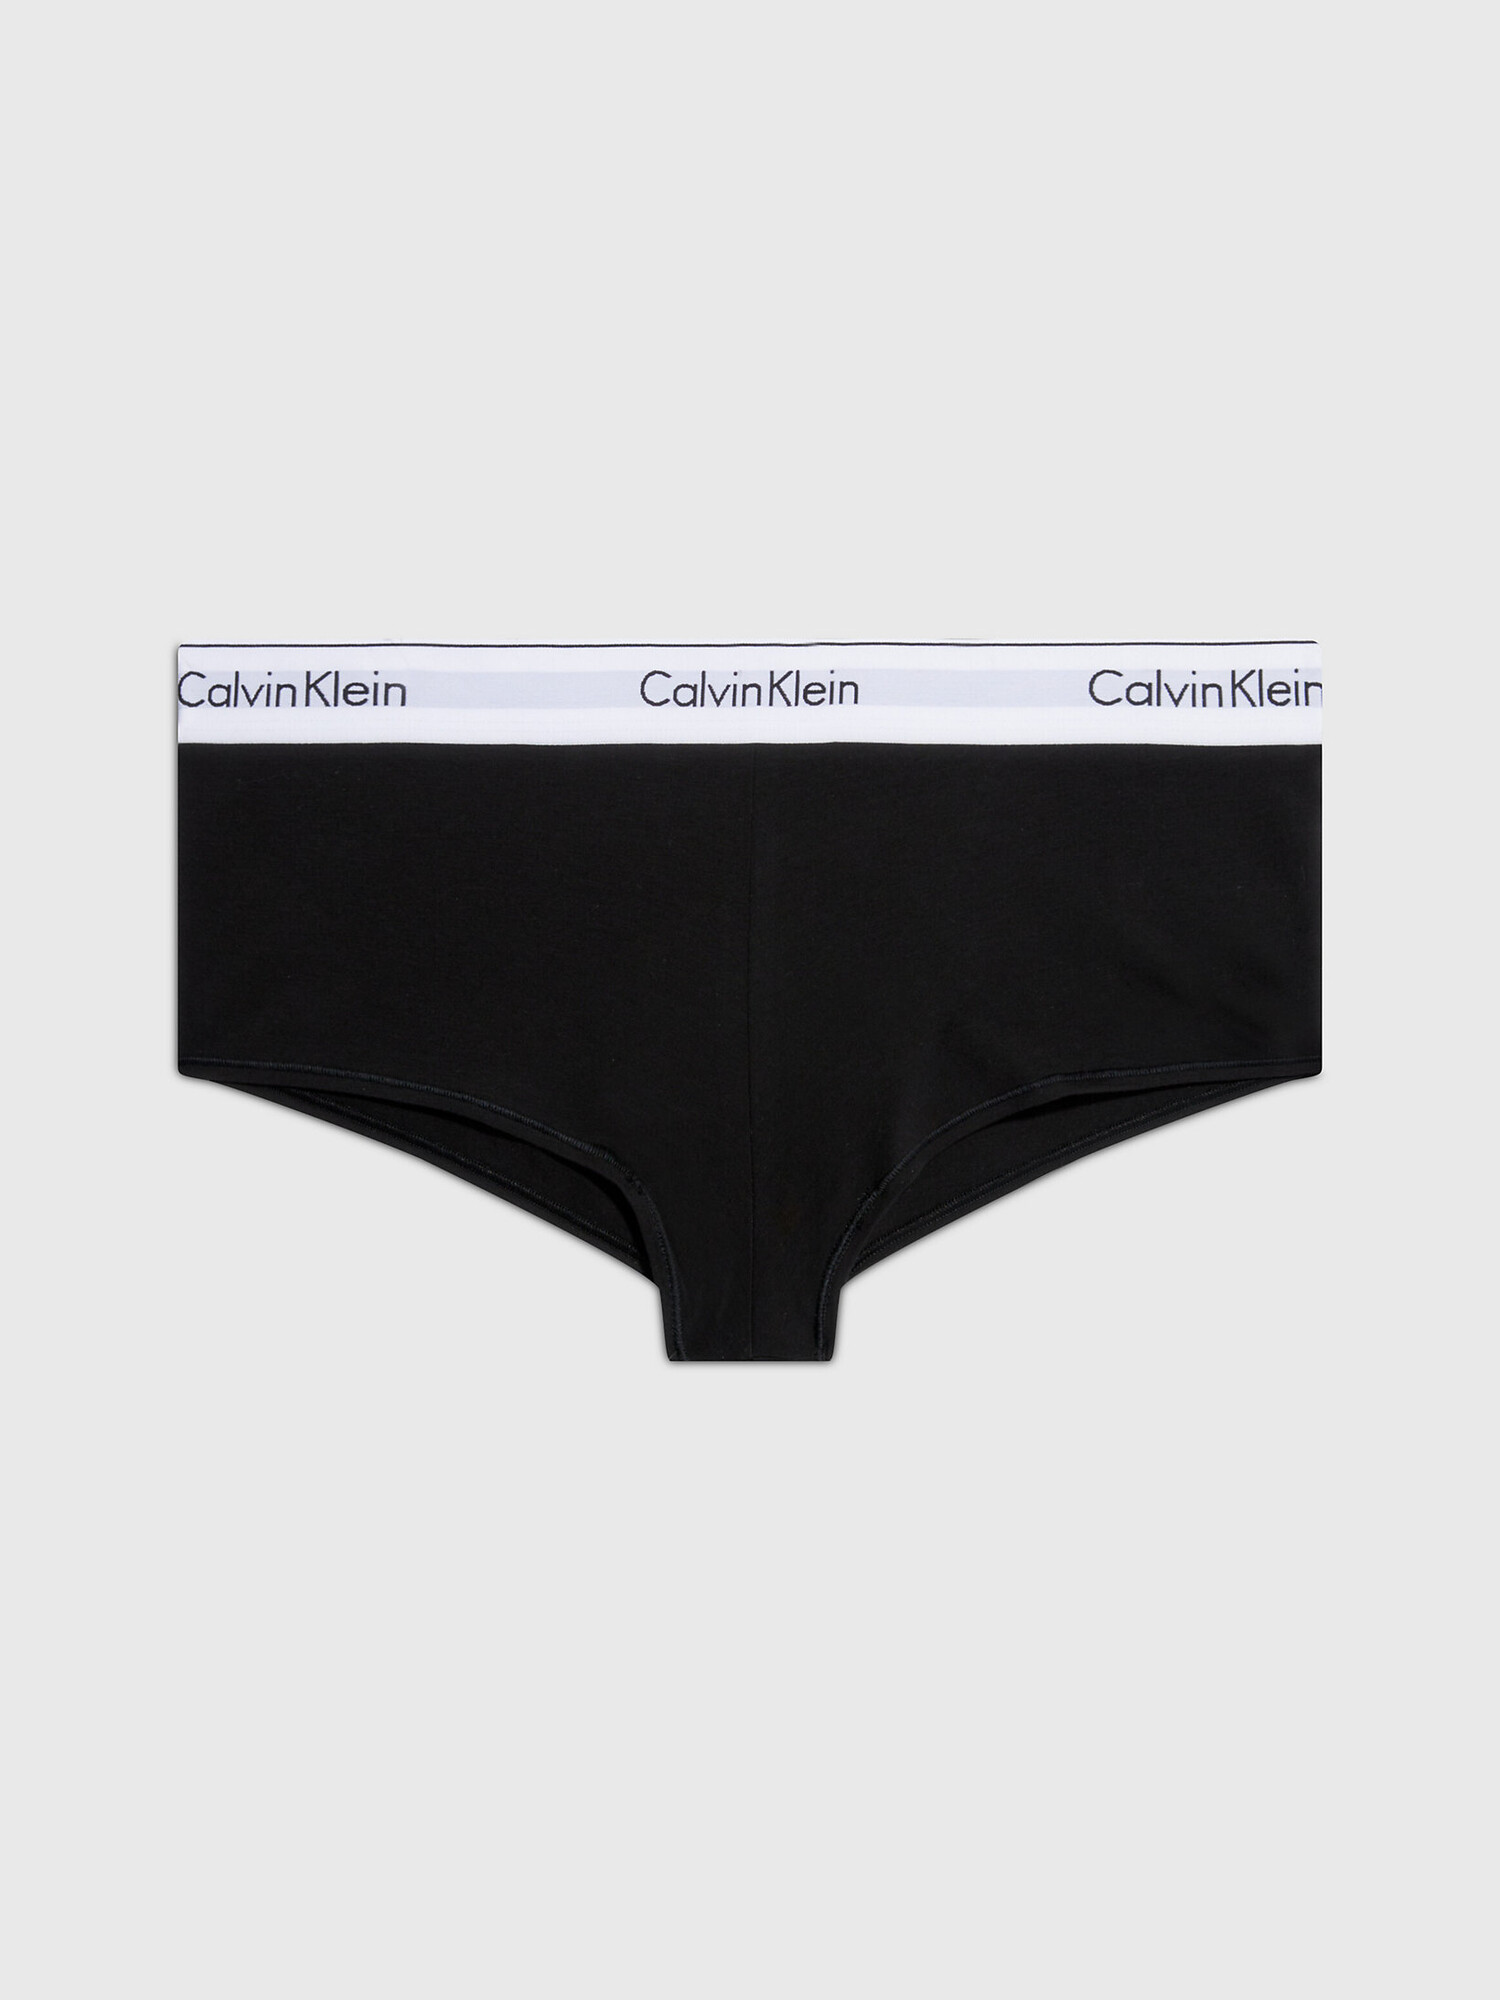 Dámské kalhotky šortky F3788E-001 černá - Calvin Klein černá L